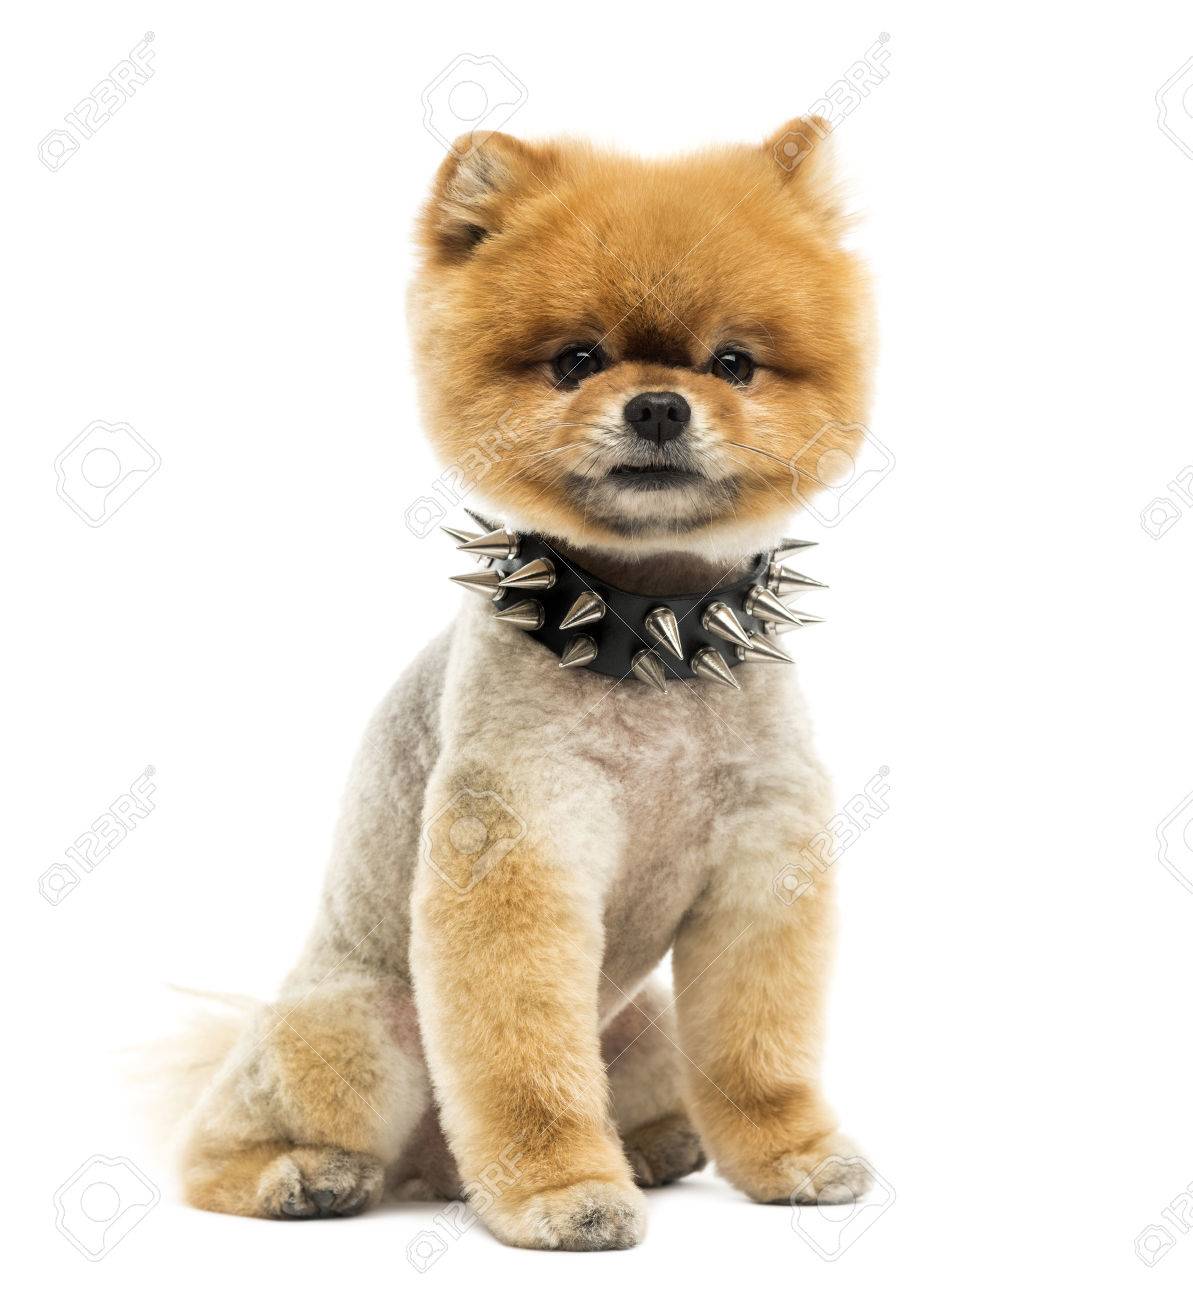 27016536-groomed-pomeranian-dog-sitting-wearing-a-spiked-collar.jpg